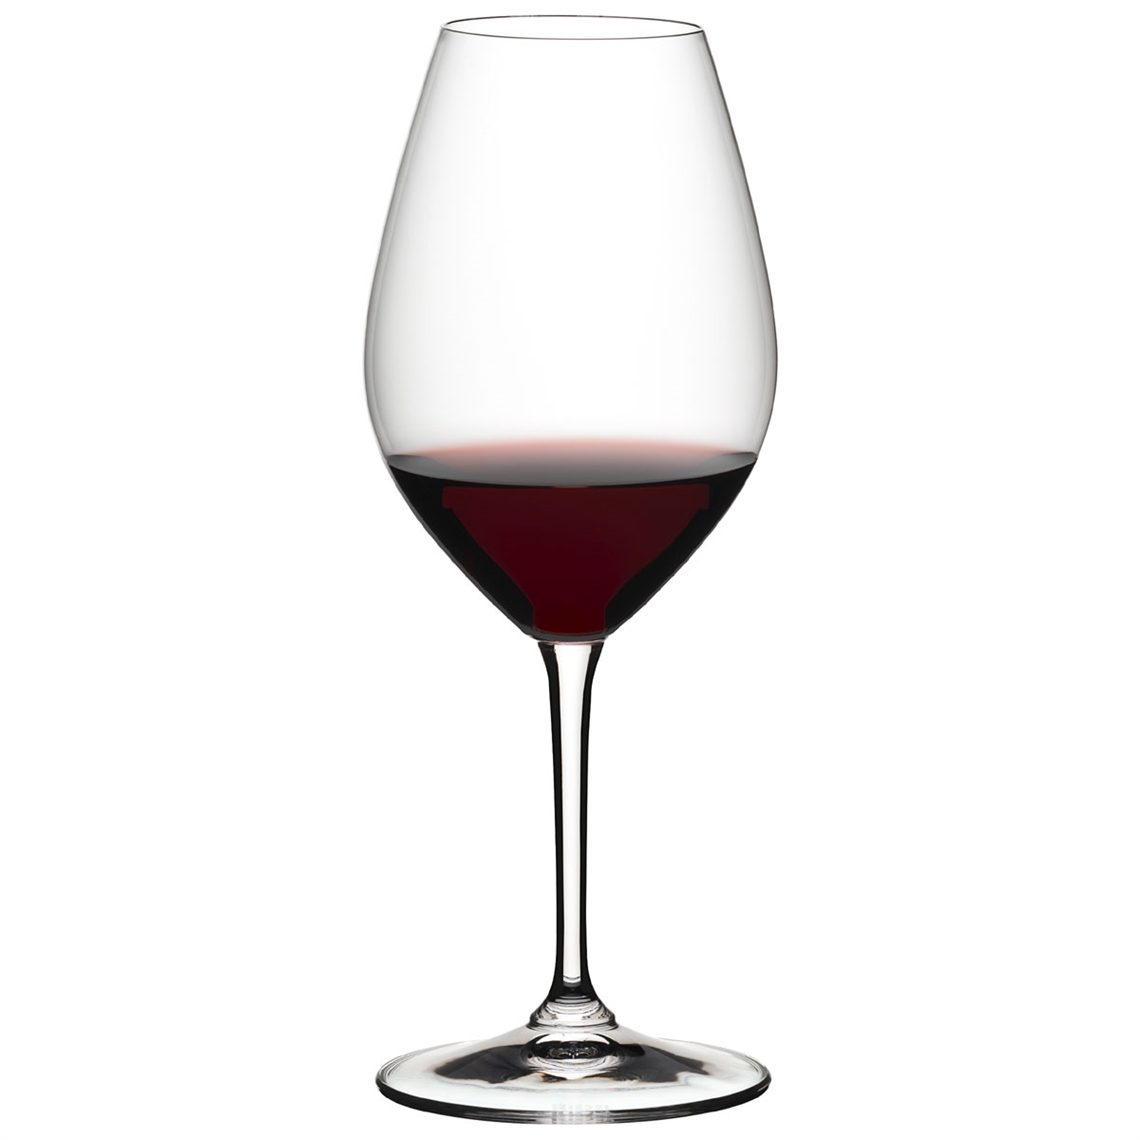 Riedel Wine Friendly Red Wine Glass 002 - Set of 4 - 6422/02